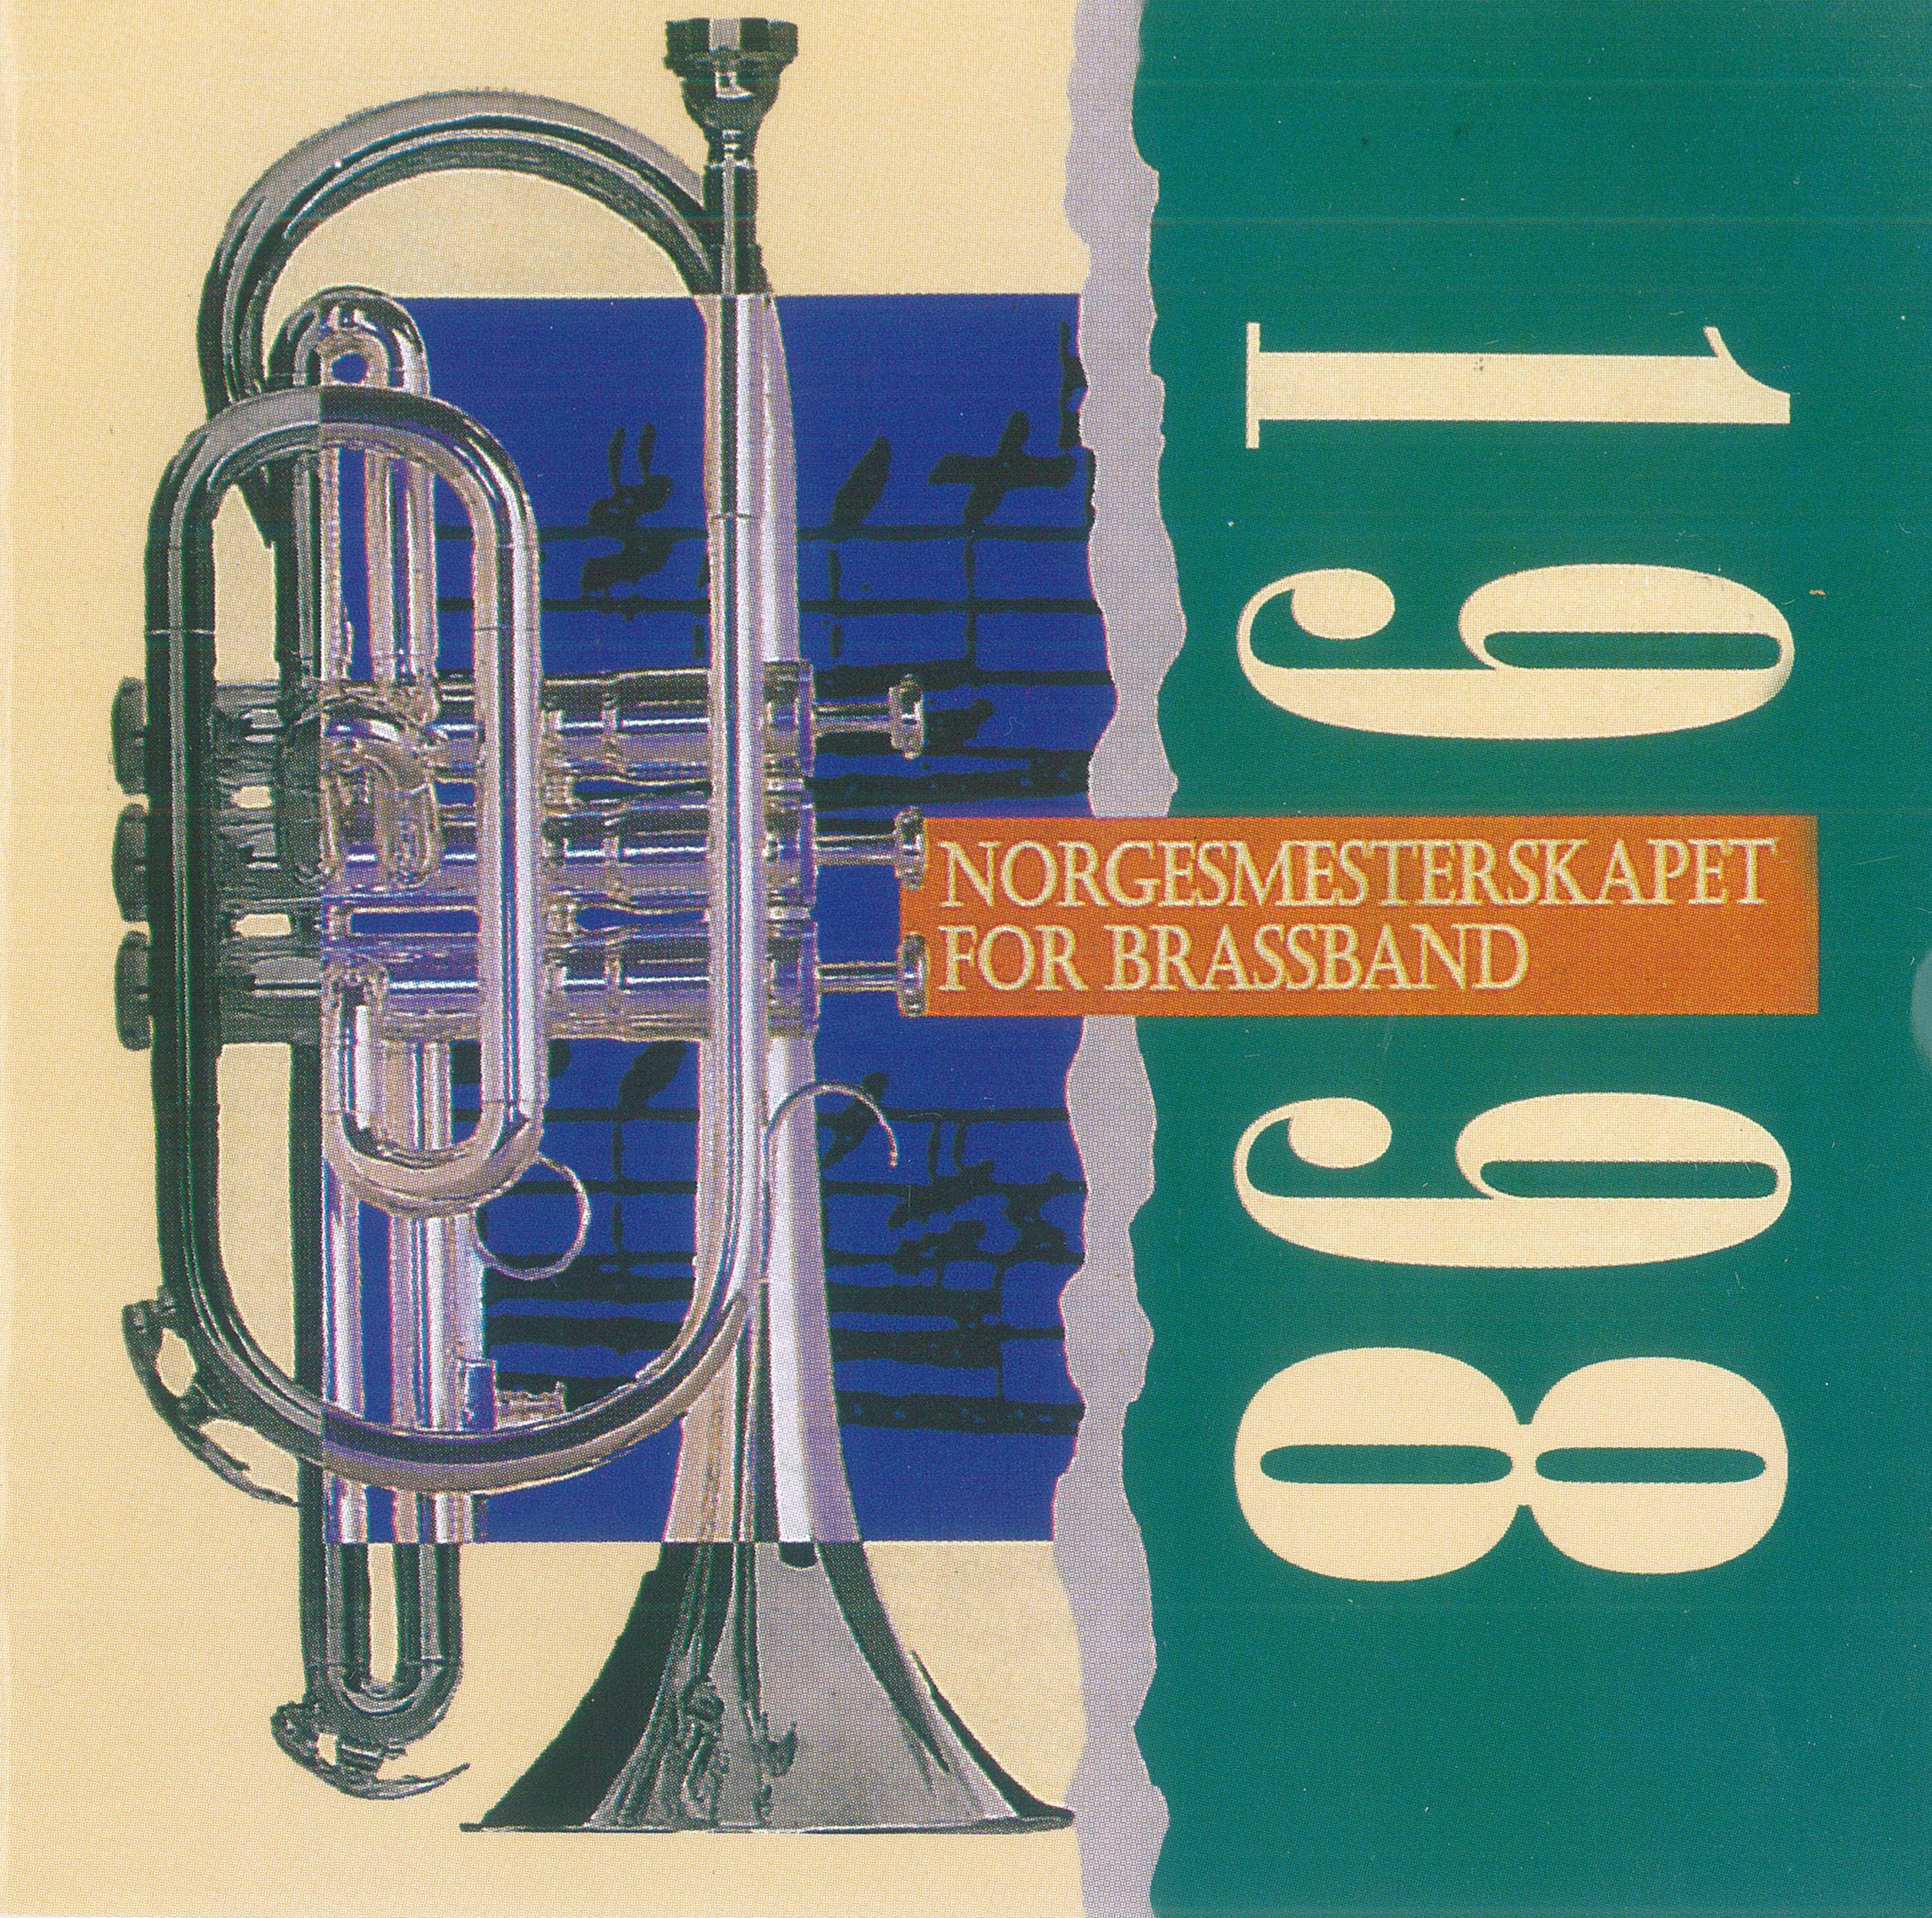 Norwegian Brass Band Championships 1998 - Download